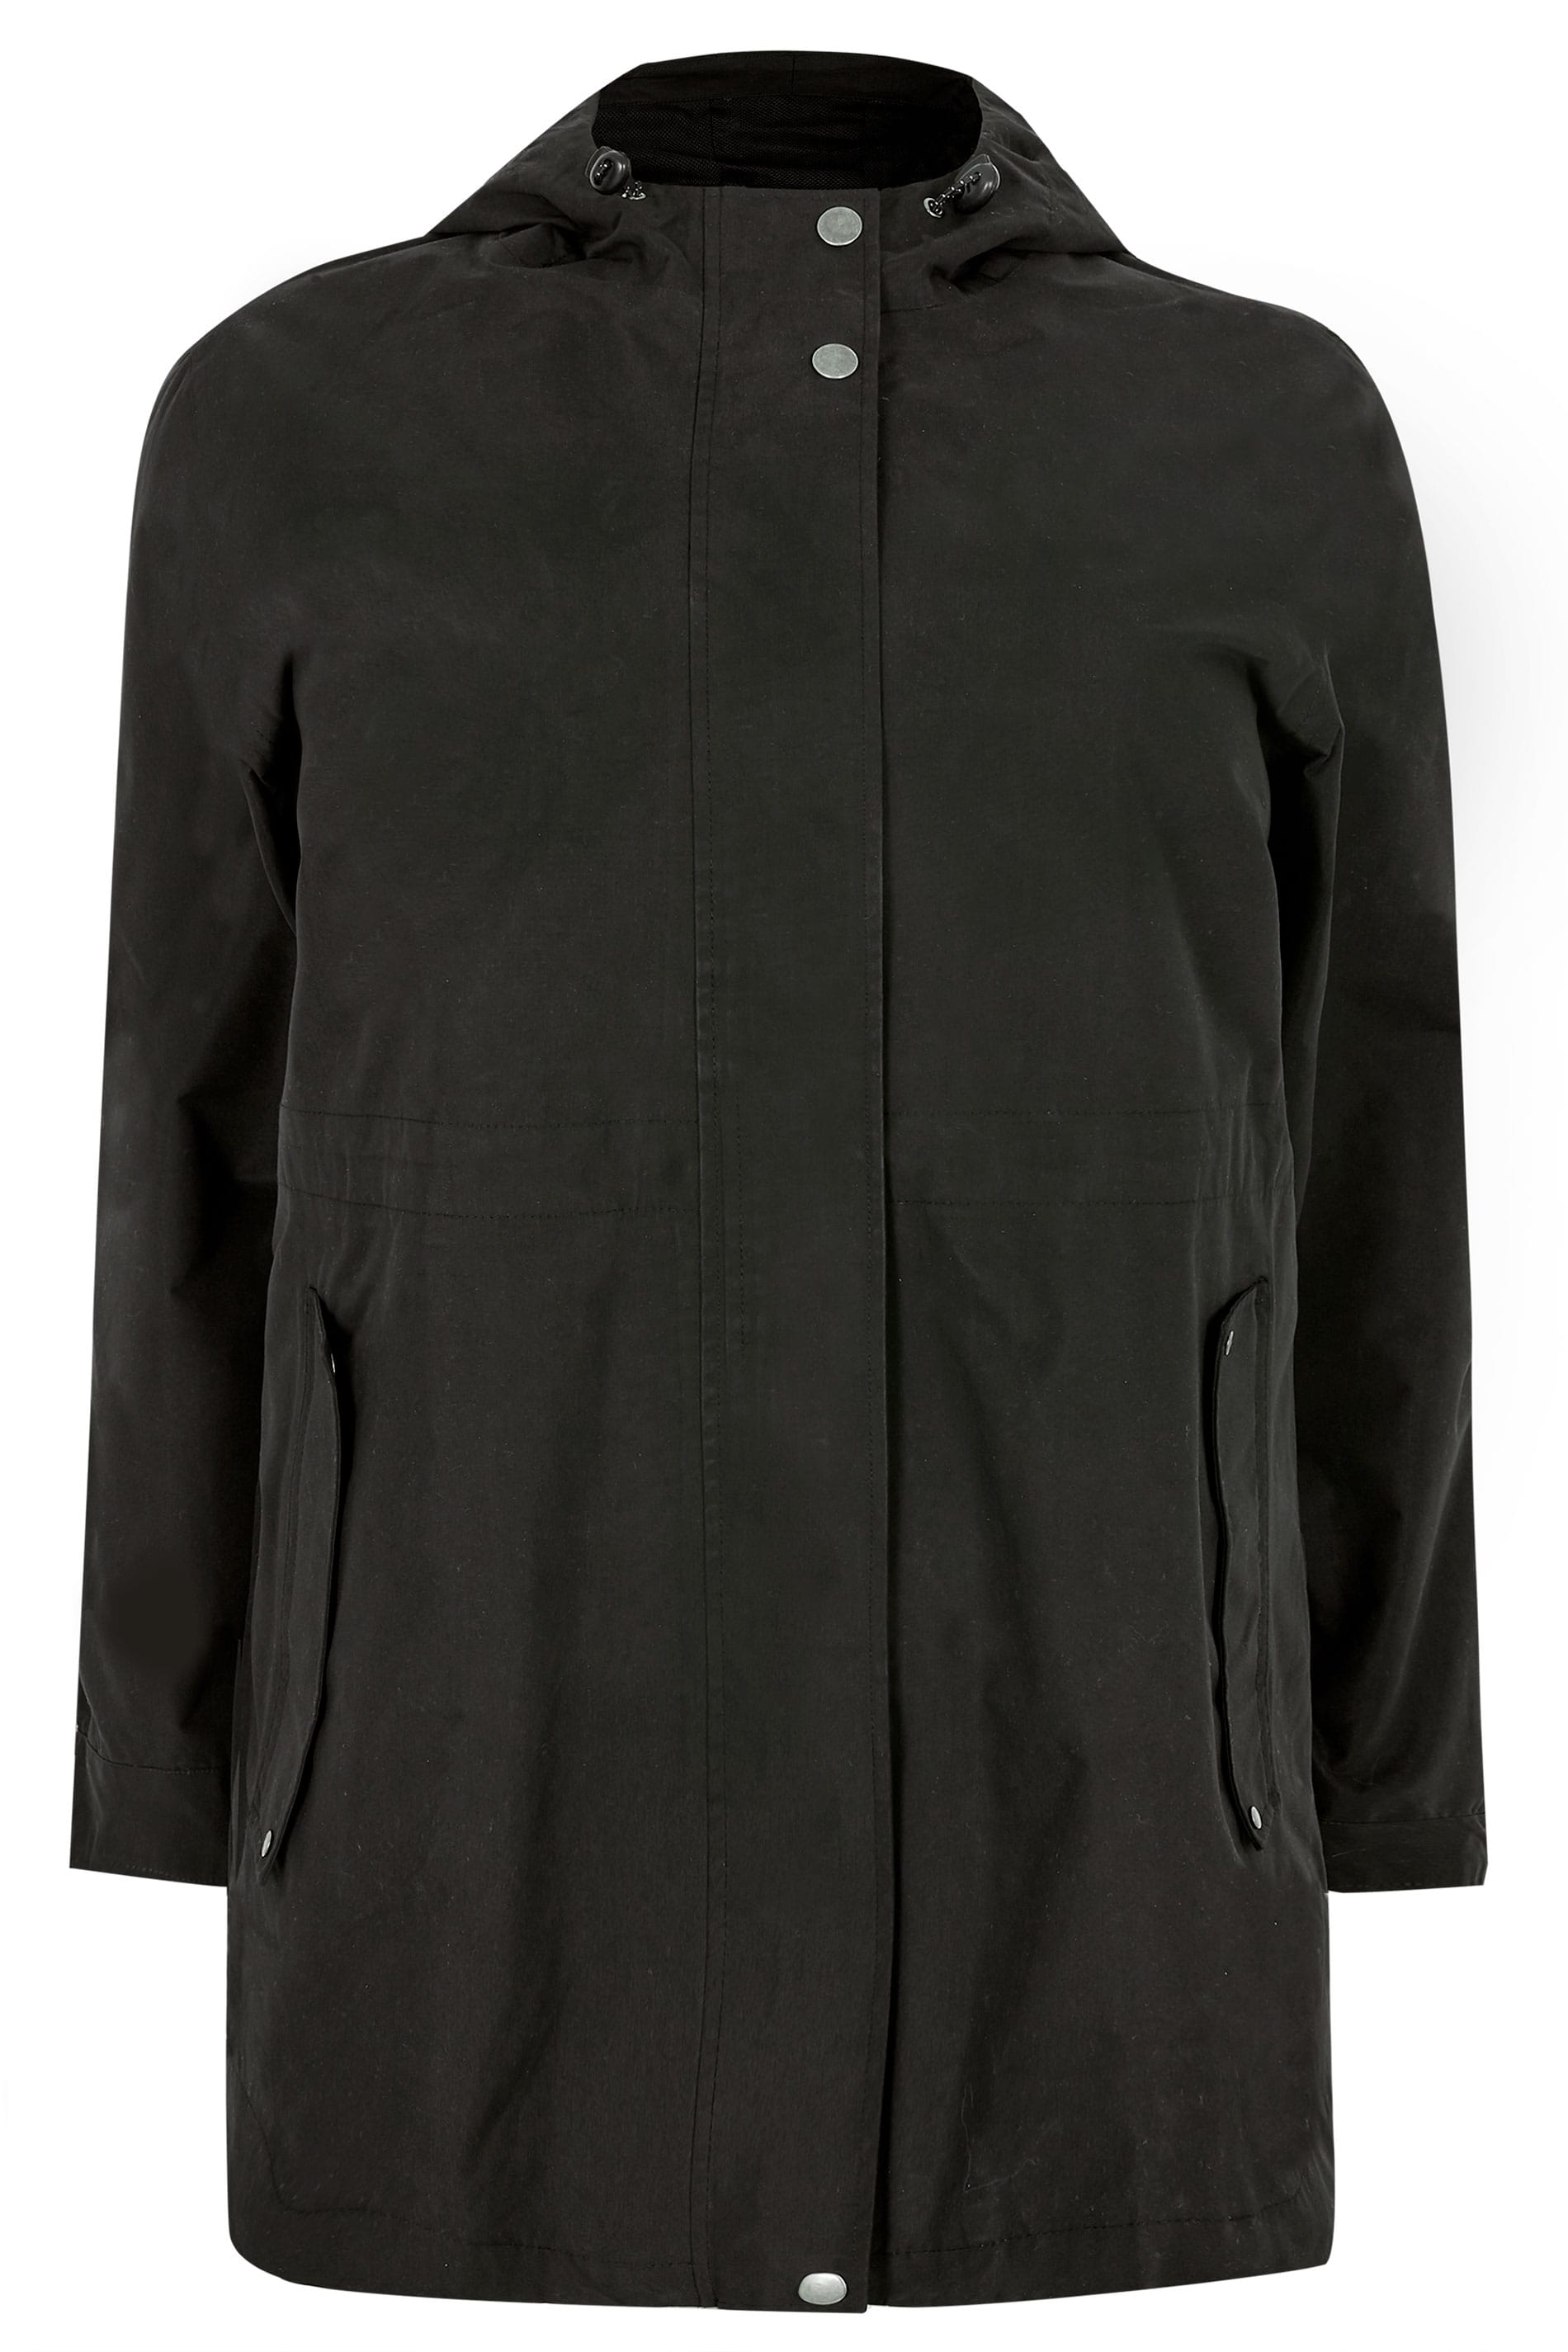 Plus Size Black Waterproof Jacket | Sizes 16 to 36 | Yours Clothing